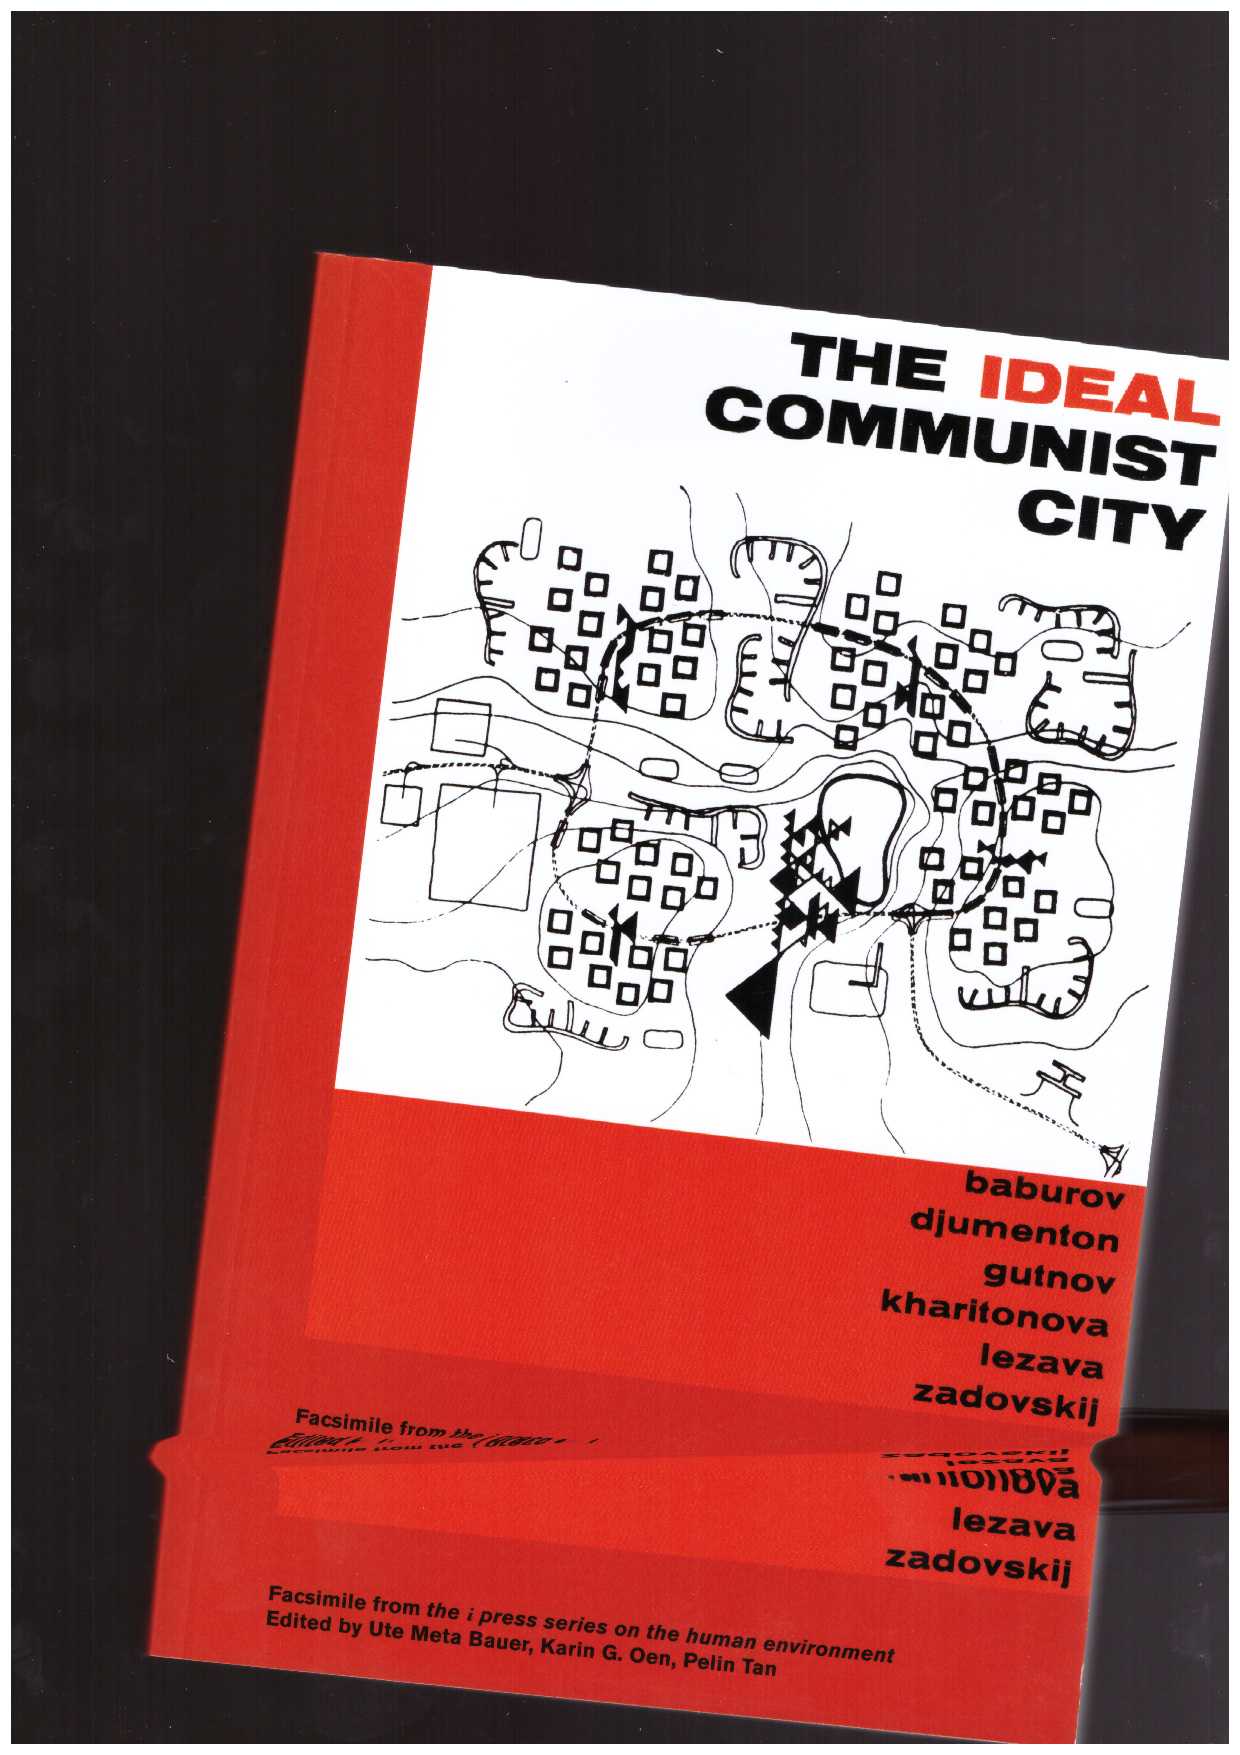 META BAUER, Ute; OEN, Karin; TAN, Pelin (eds.) - The Ideal Communist City